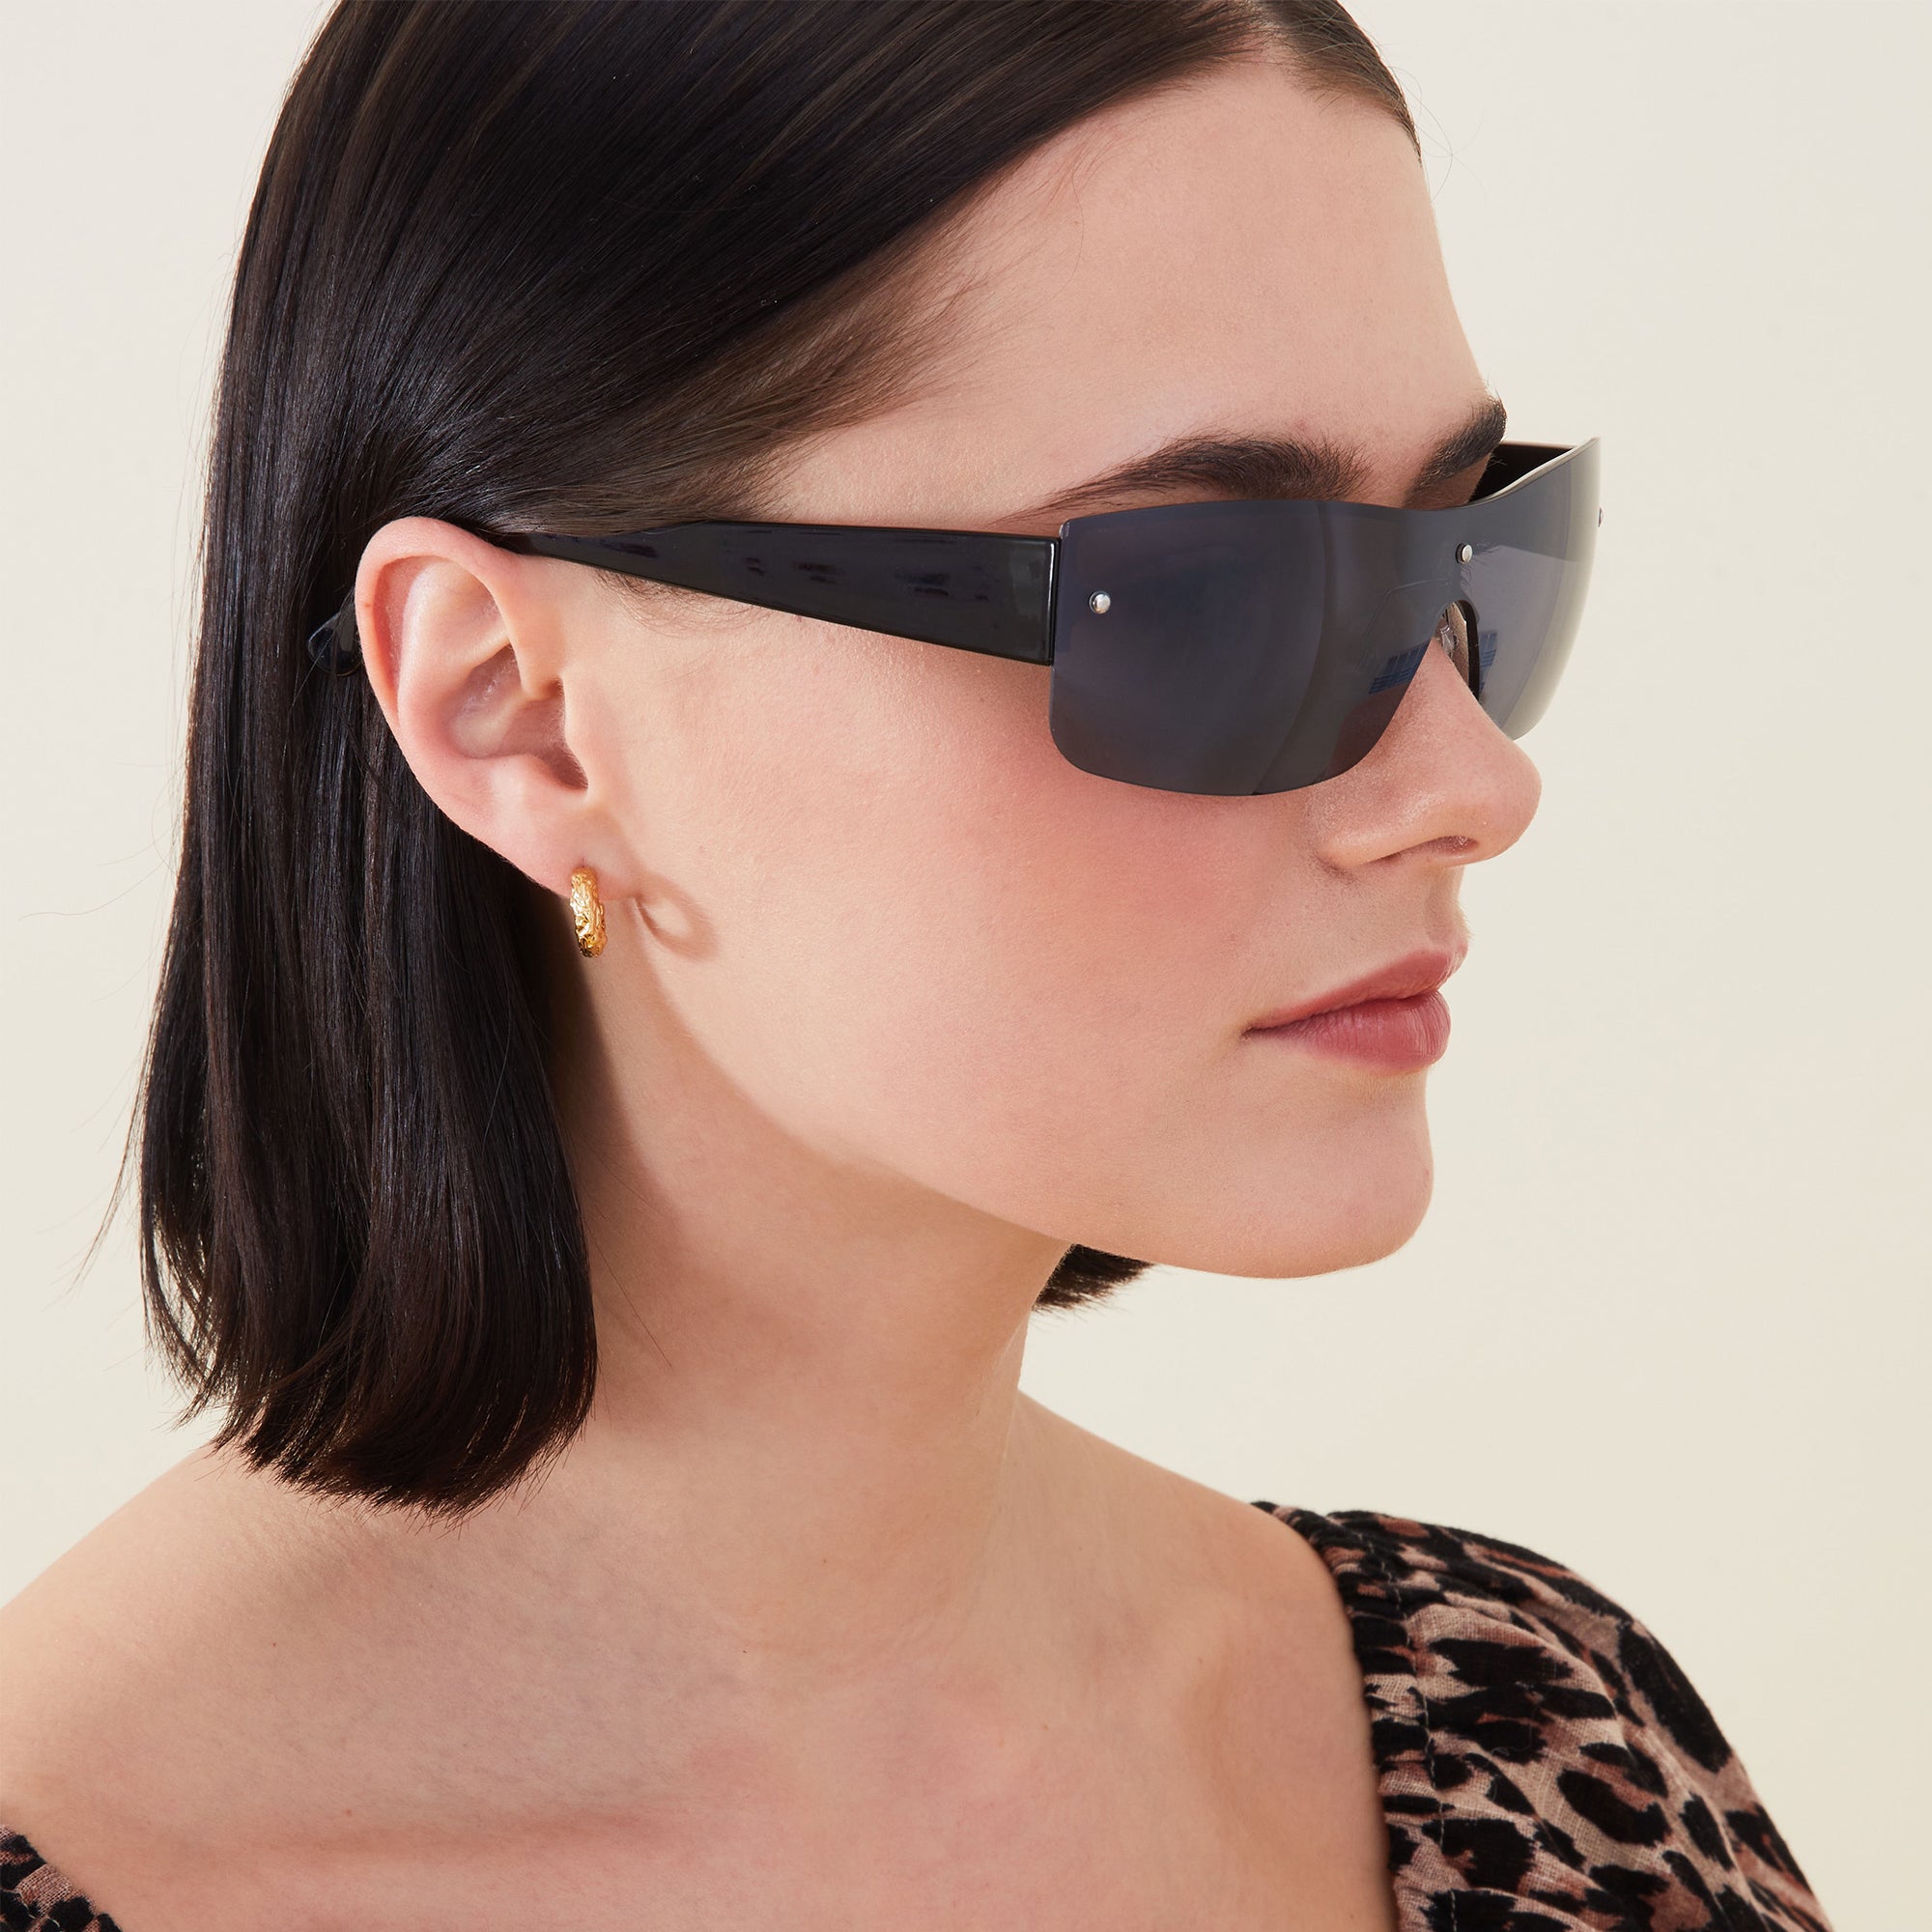 Accessorize London Women's Sports Wrap Visor Sunglasses